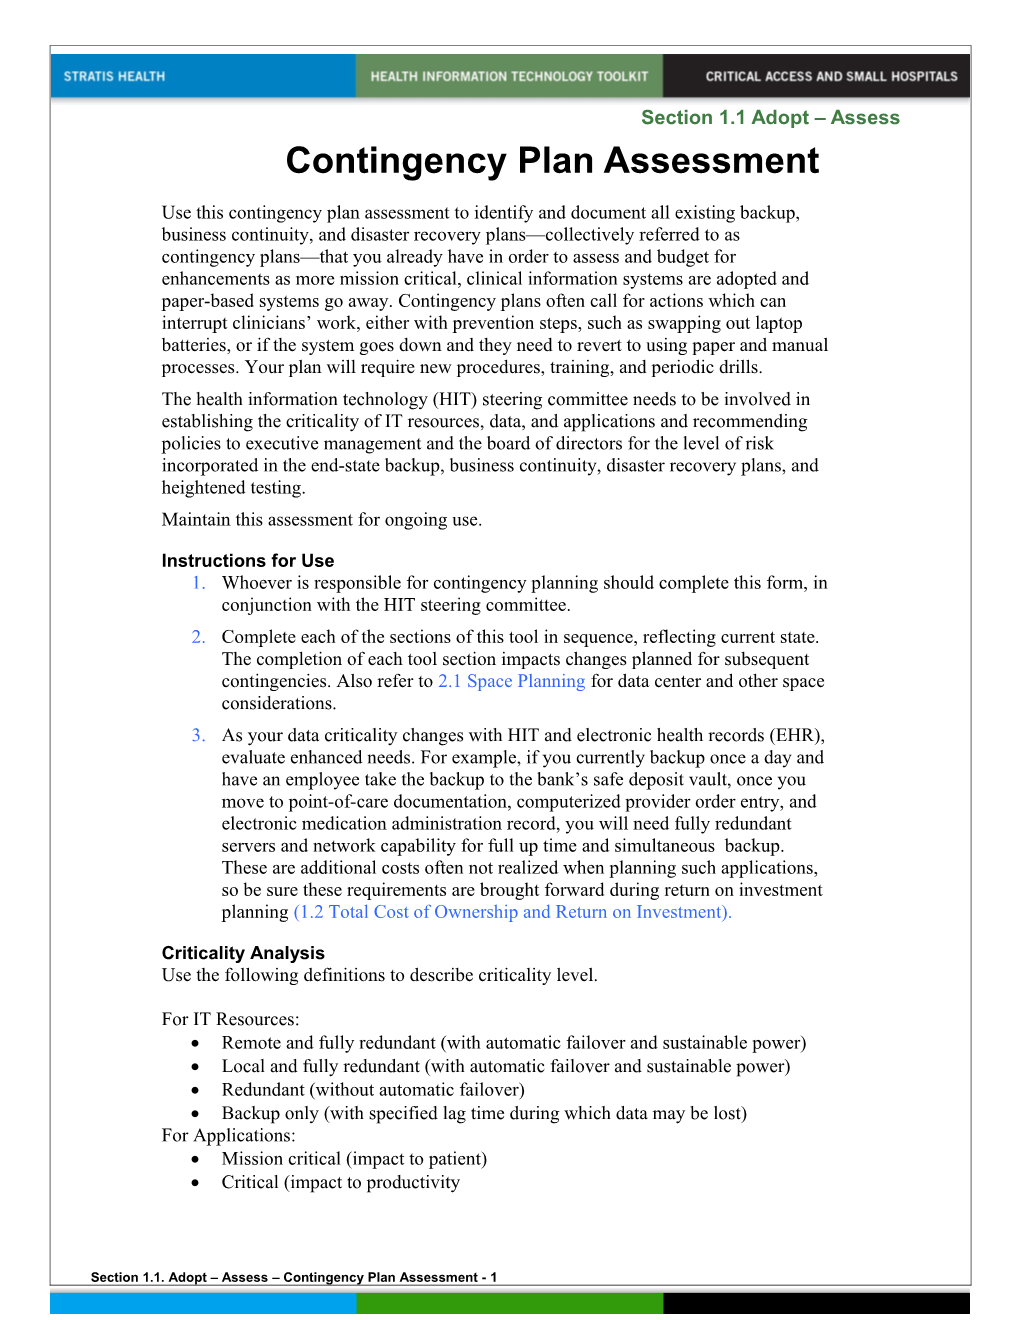 Contingency Plan Assessment